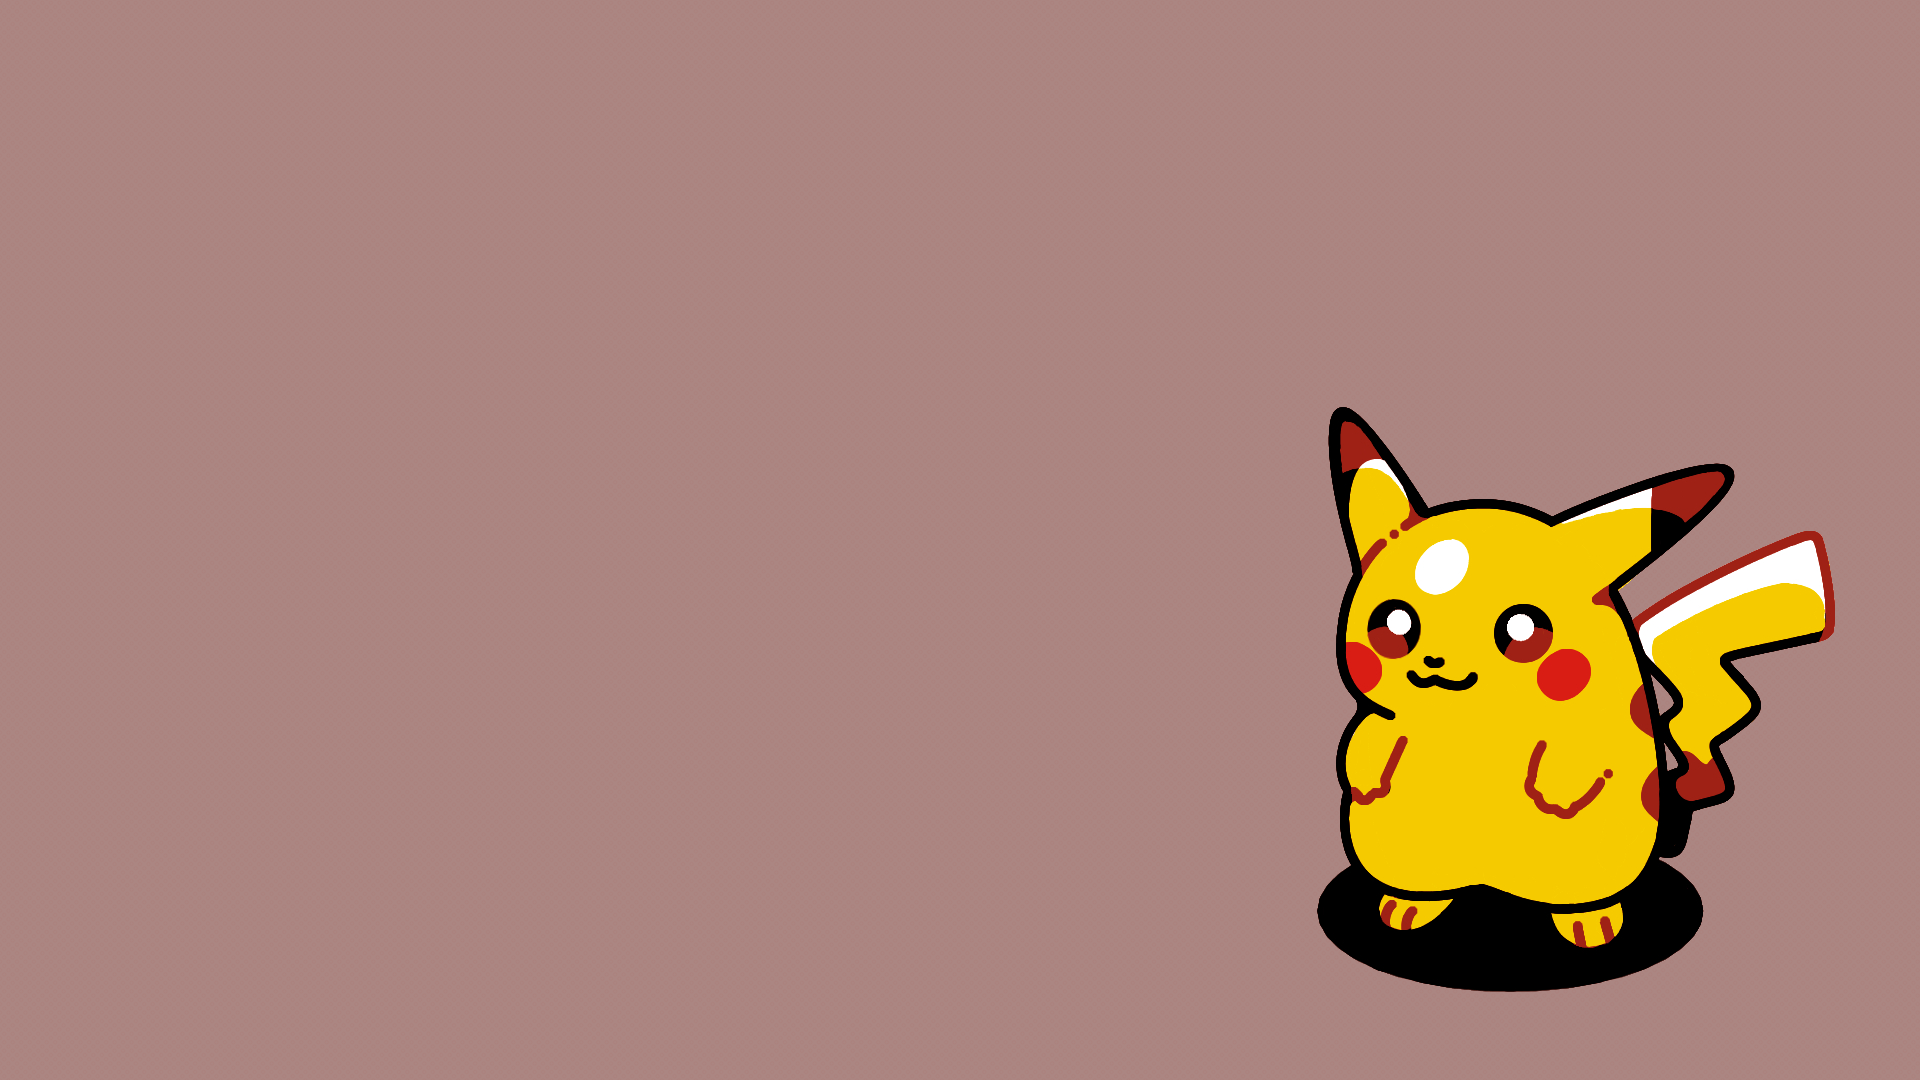 Anime 1920x1080 video games minimalism Nintendo Pokémon Pikachu simple background fictional creatures